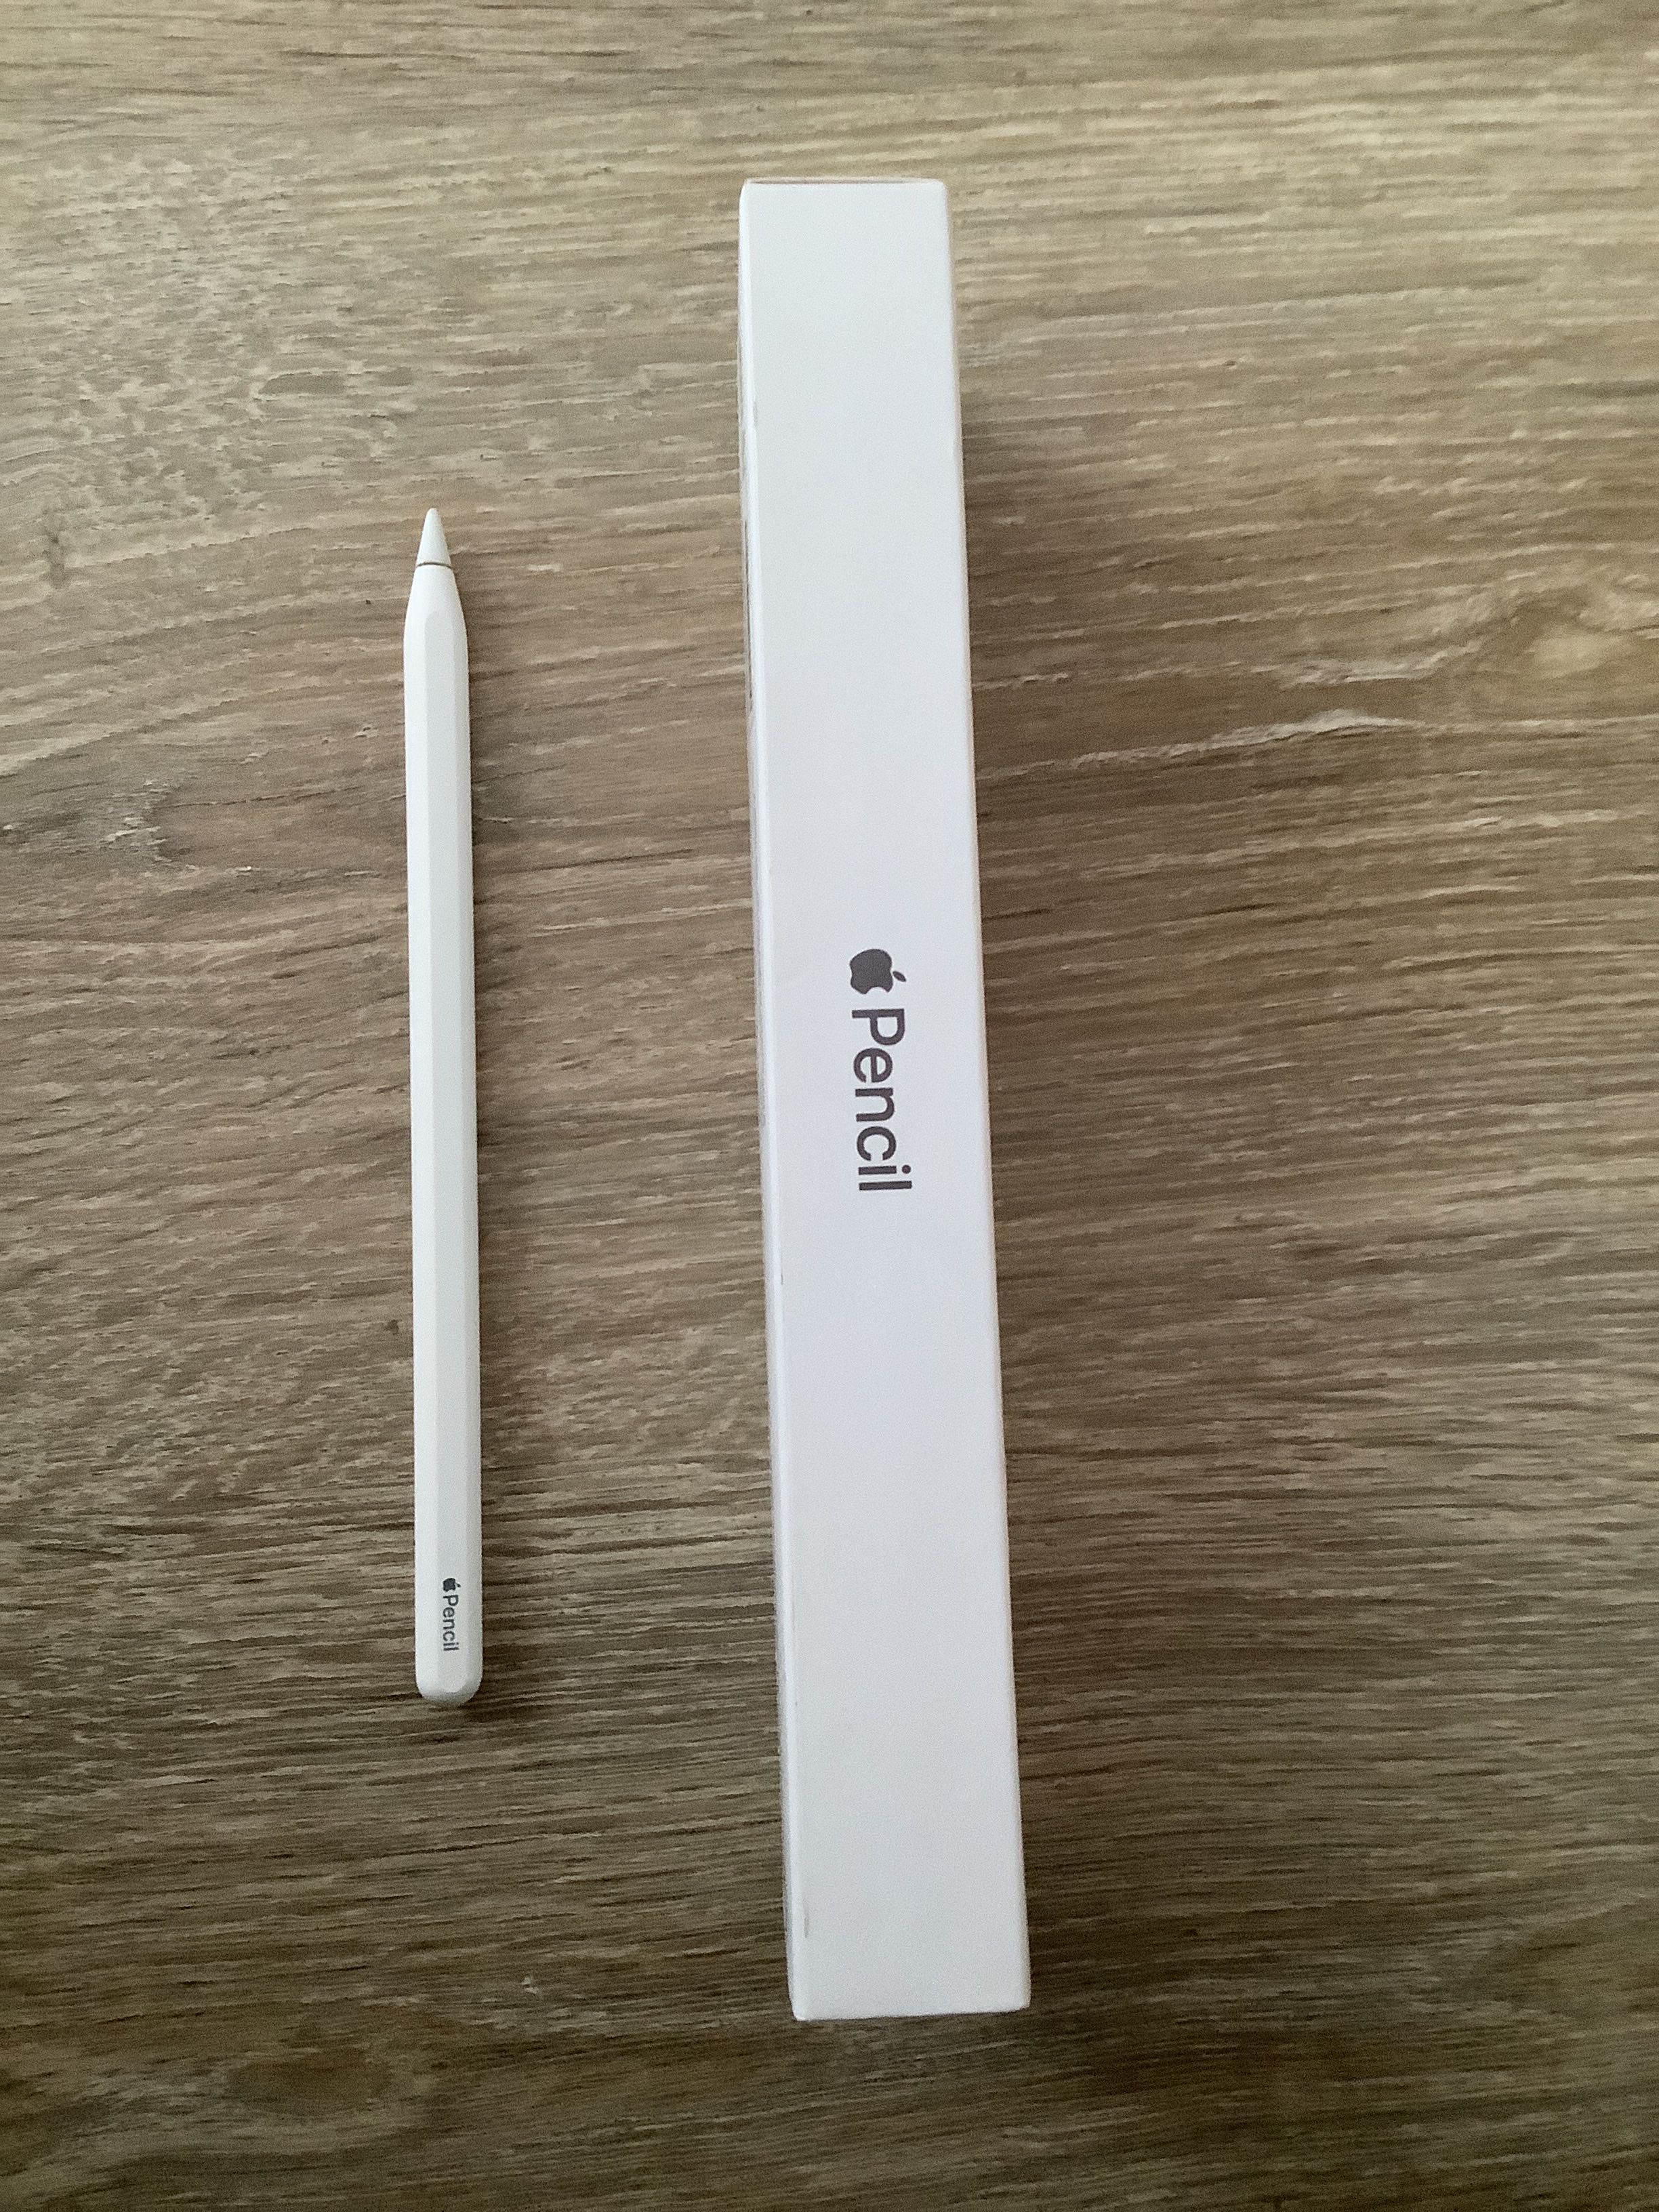 Rysik Apple Pencil do iPada 2 generacja